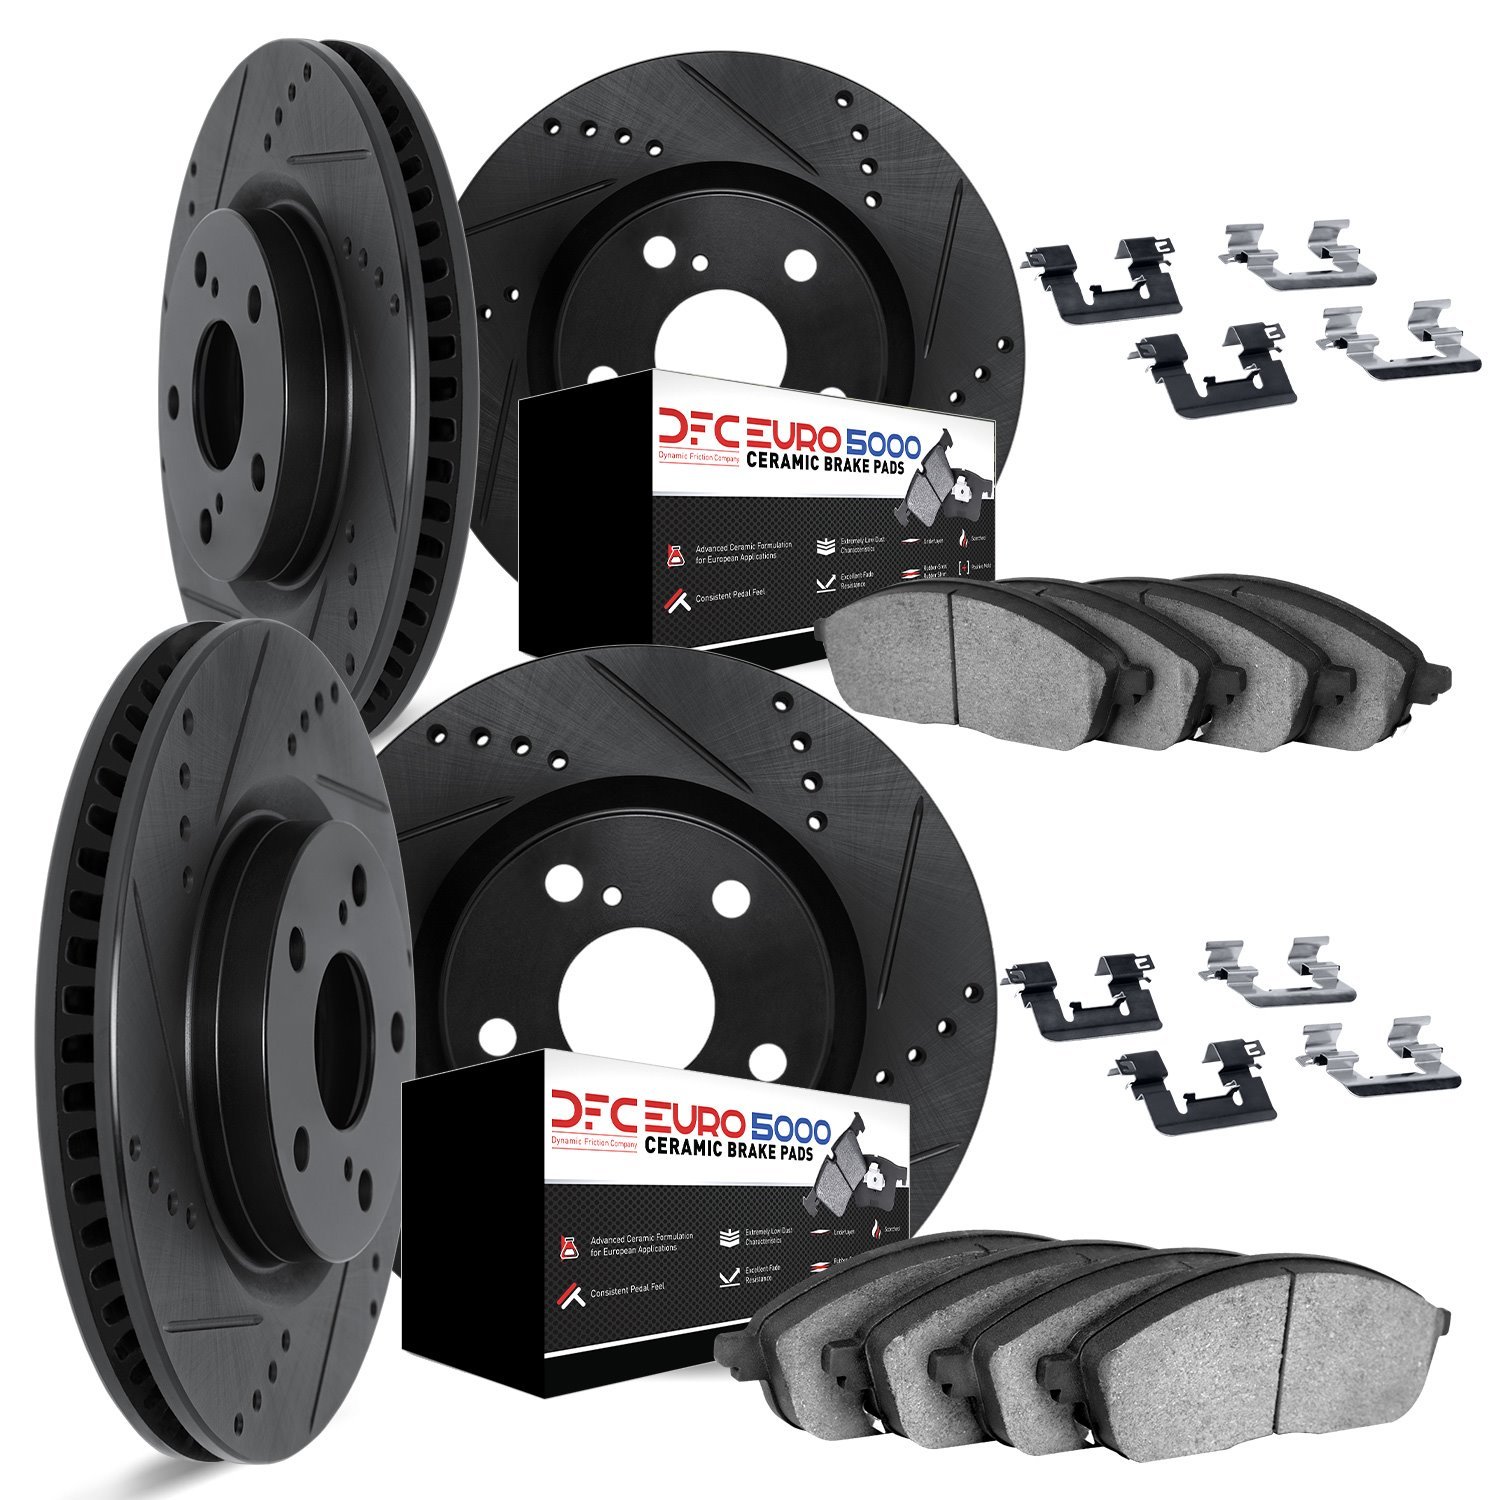 8614-31037 Drilled/Slotted Brake Rotors w/5000 Euro Ceramic Brake Pads Kit & Hardware [Black], 2007-2019 BMW, Position: Front an